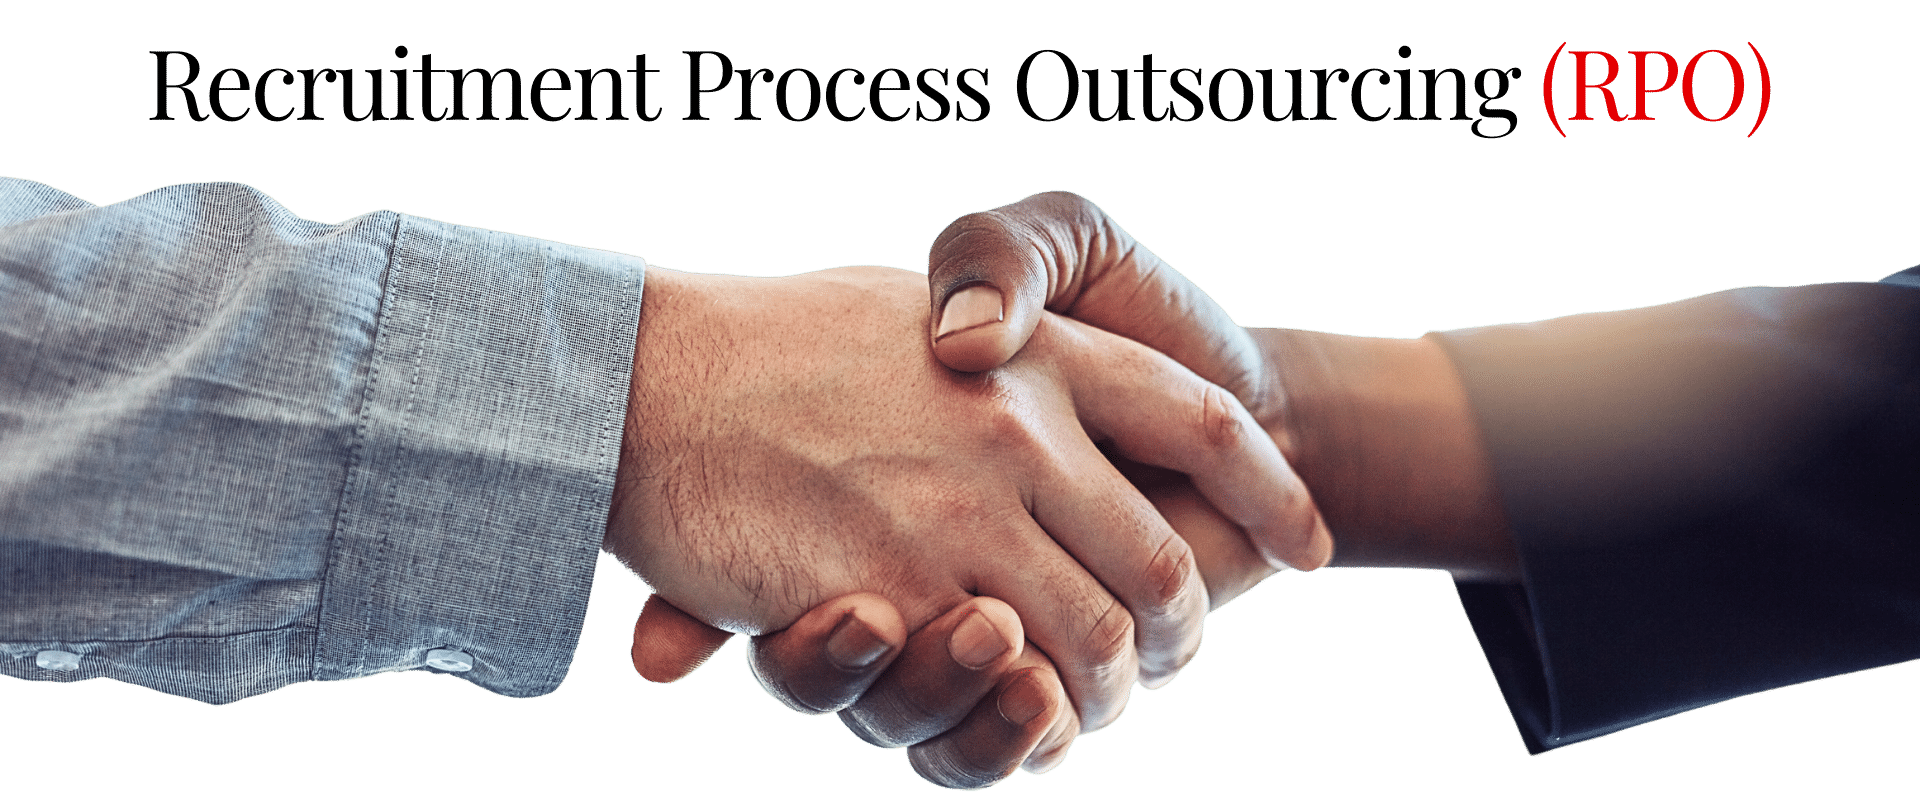 Recruitment Process Outsourcing (RPO) (3)